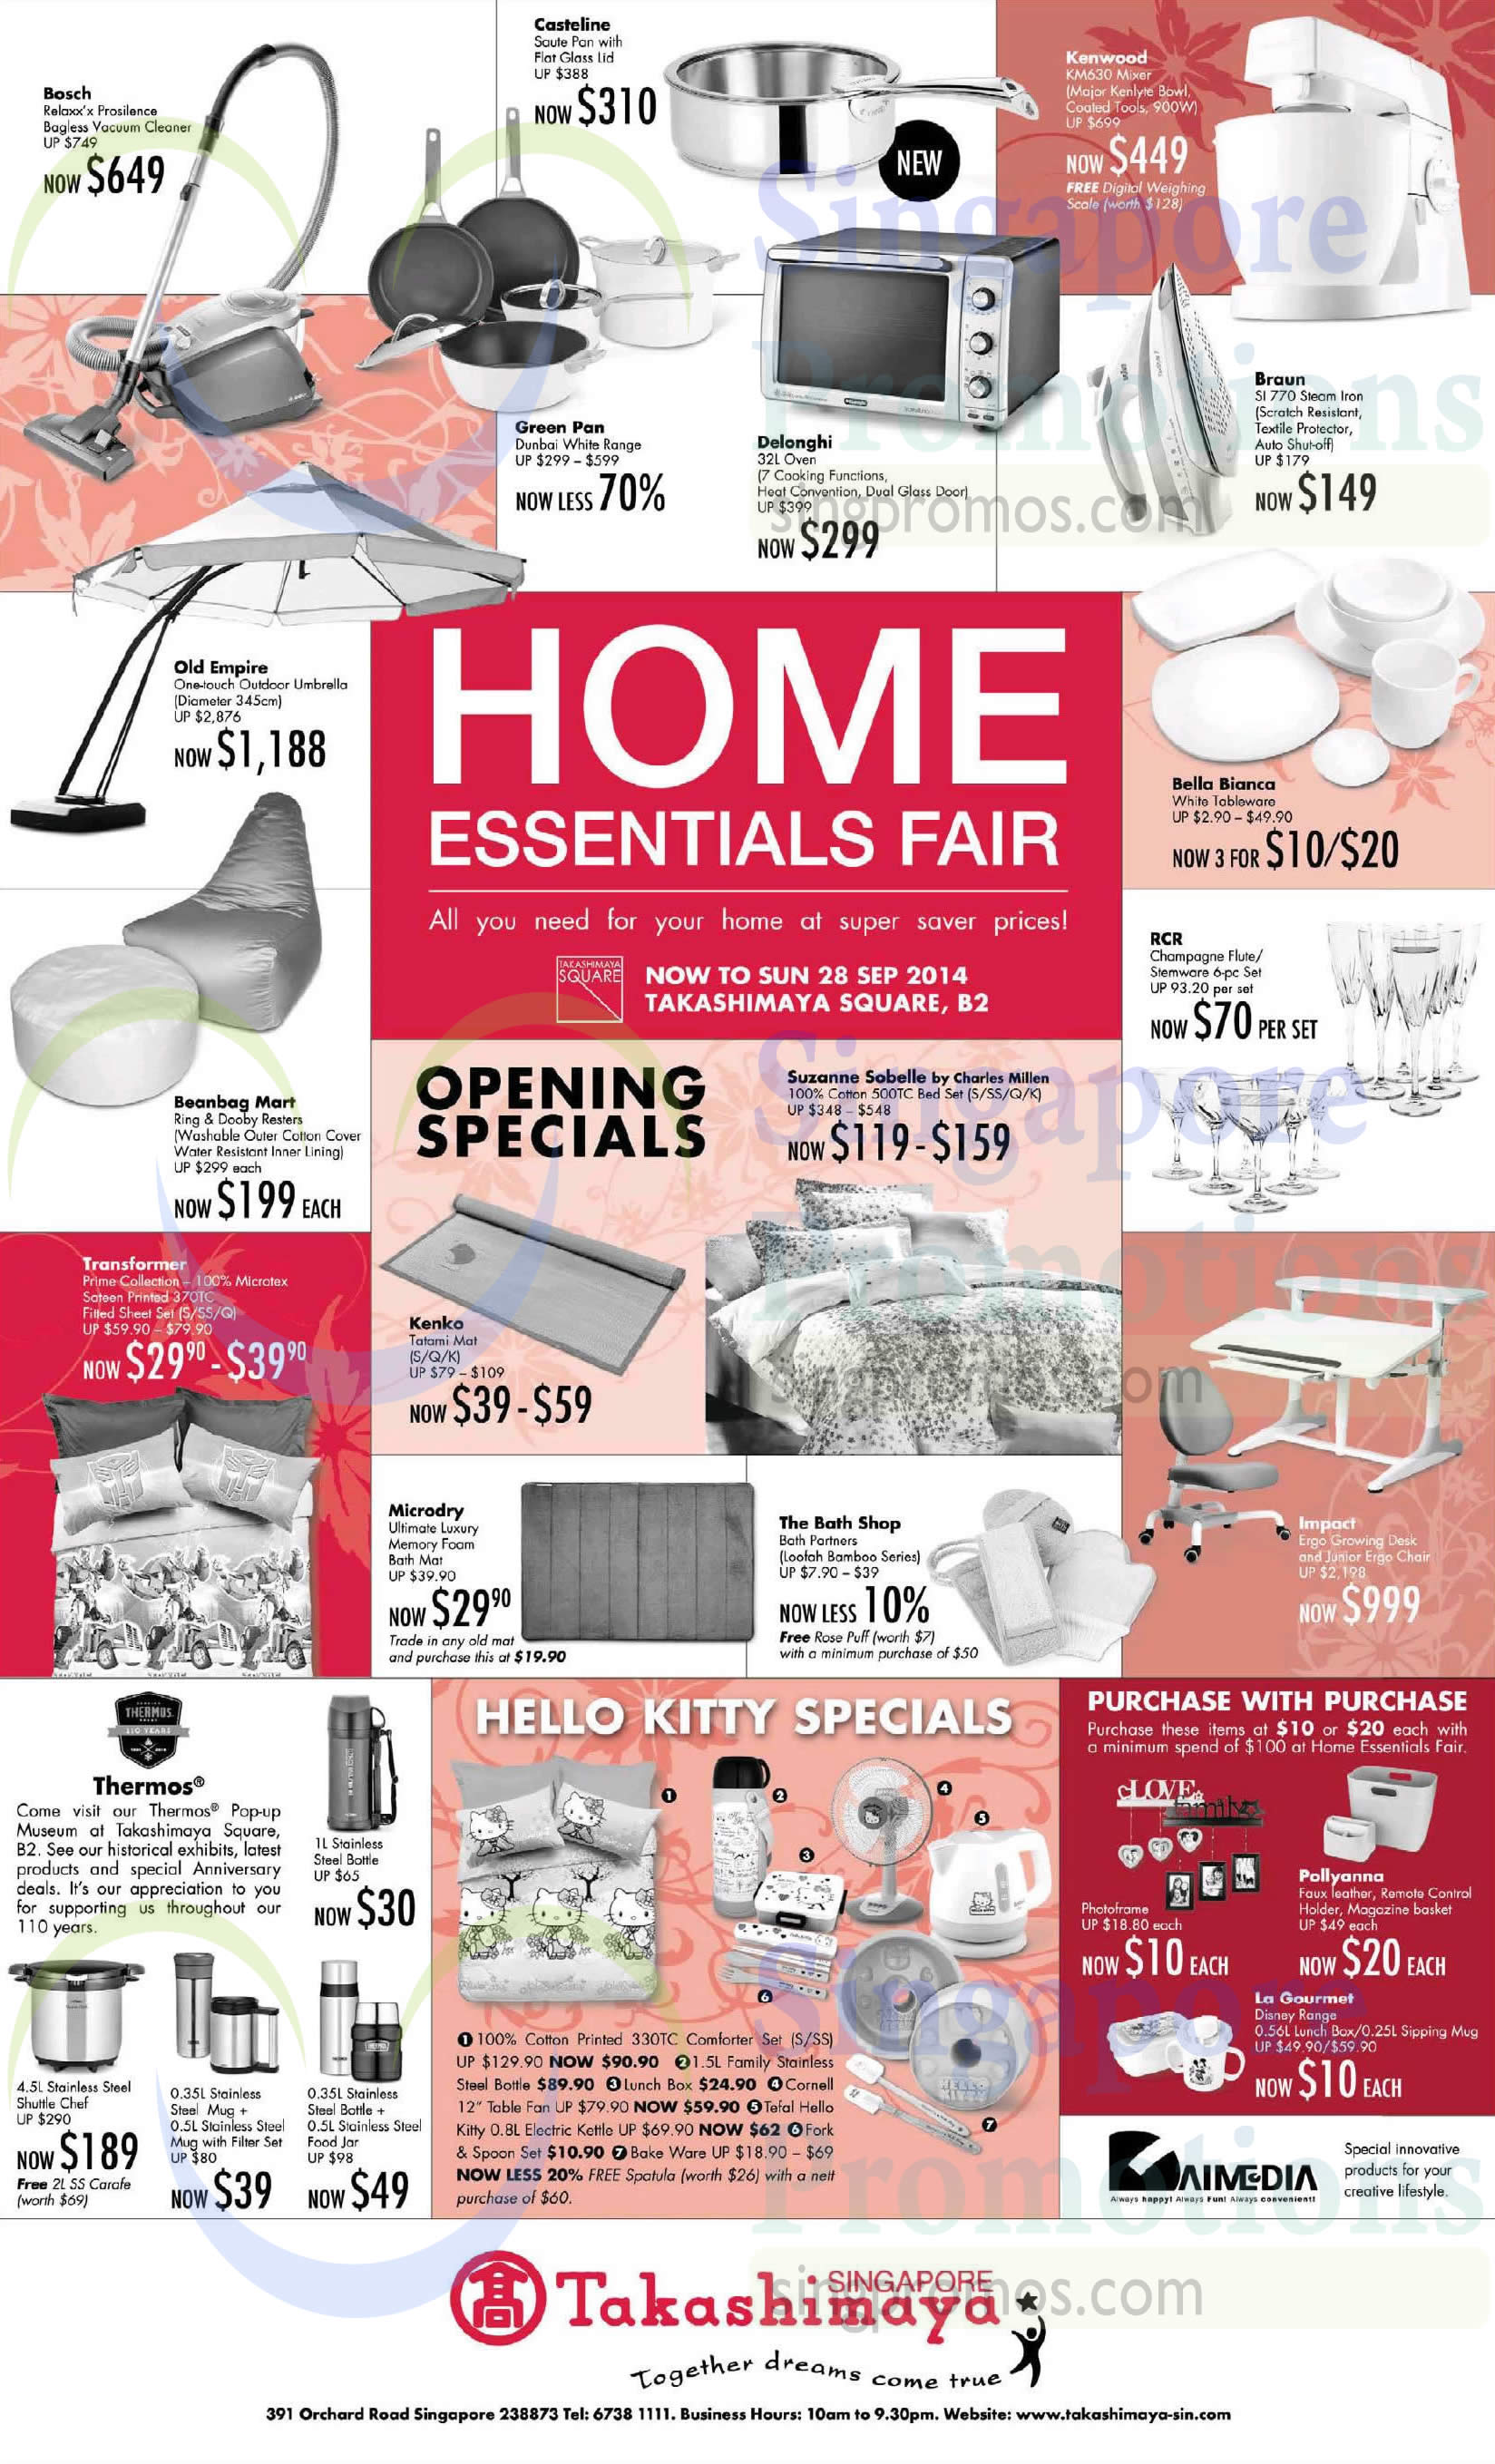 Featured image for Takashimaya Home Essentials Fair 11 - 28 Sep 2014